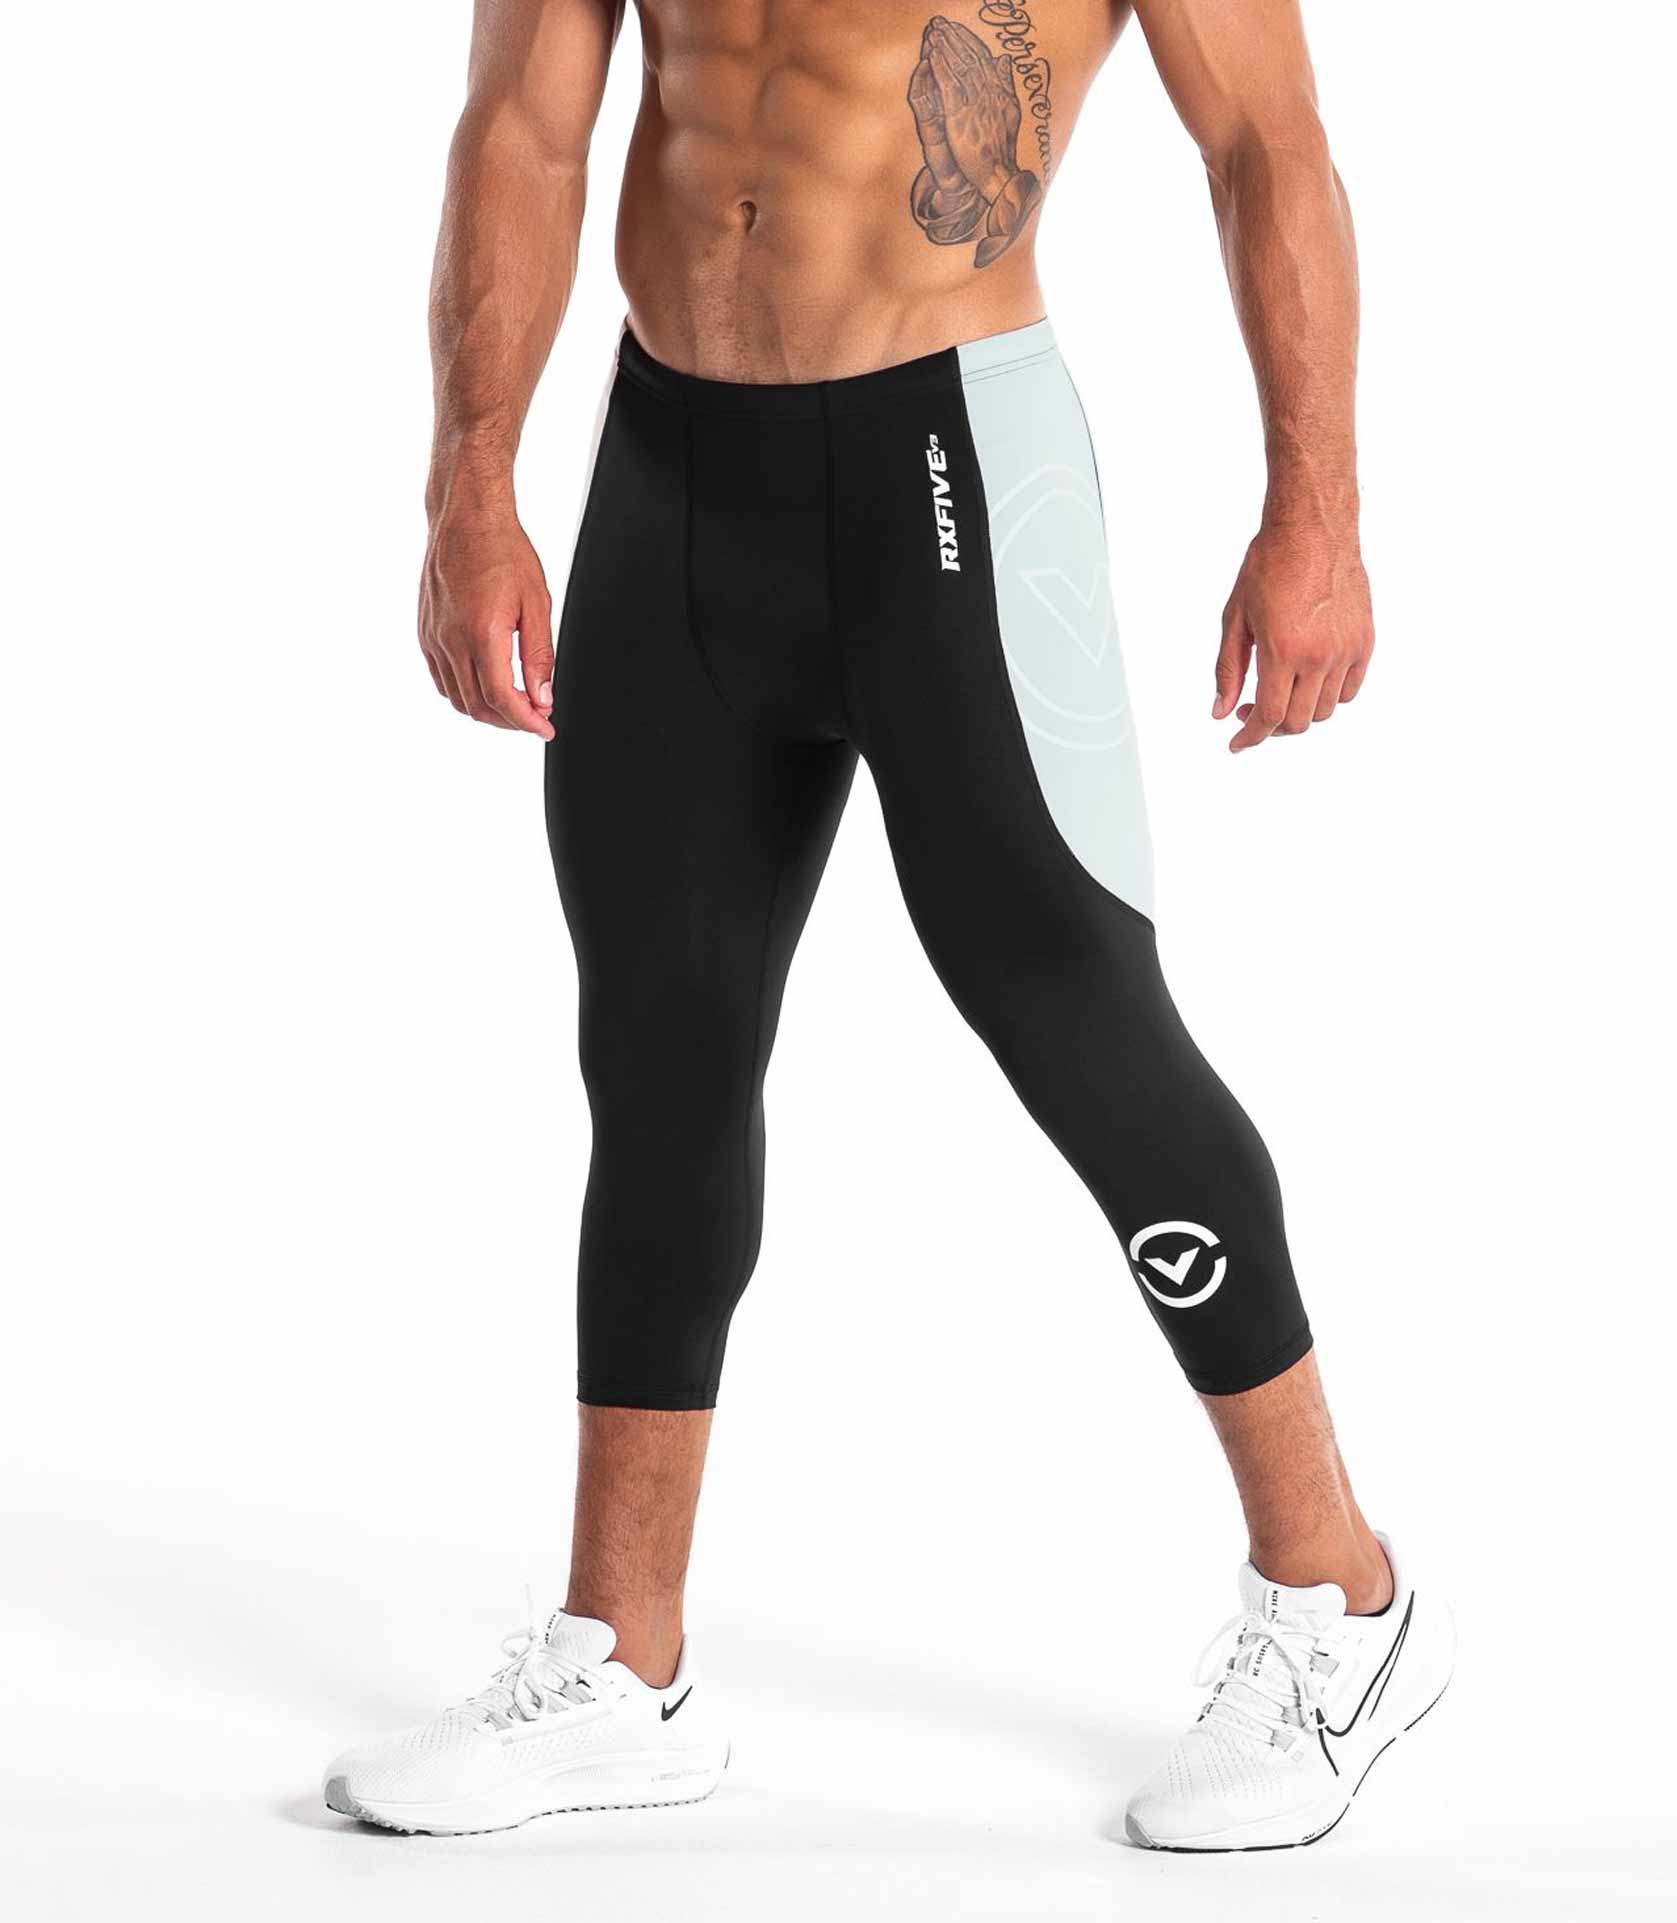 VIRUS Men's Stay Cool Tech 3/4 Length Compression Pants, Black